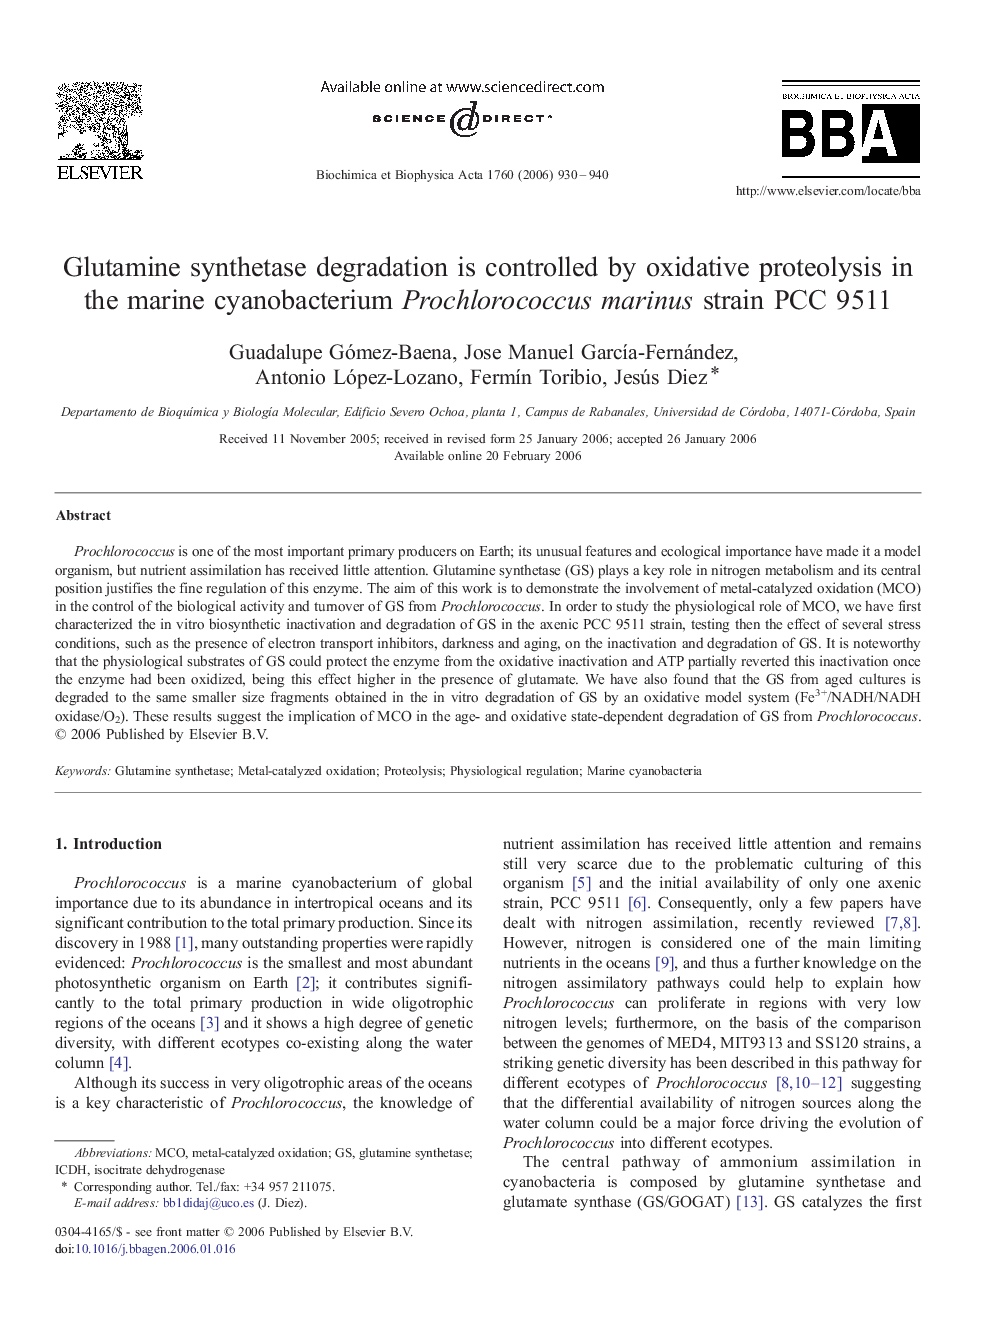 Glutamine synthetase degradation is controlled by oxidative proteolysis in the marine cyanobacterium Prochlorococcus marinus strain PCC 9511